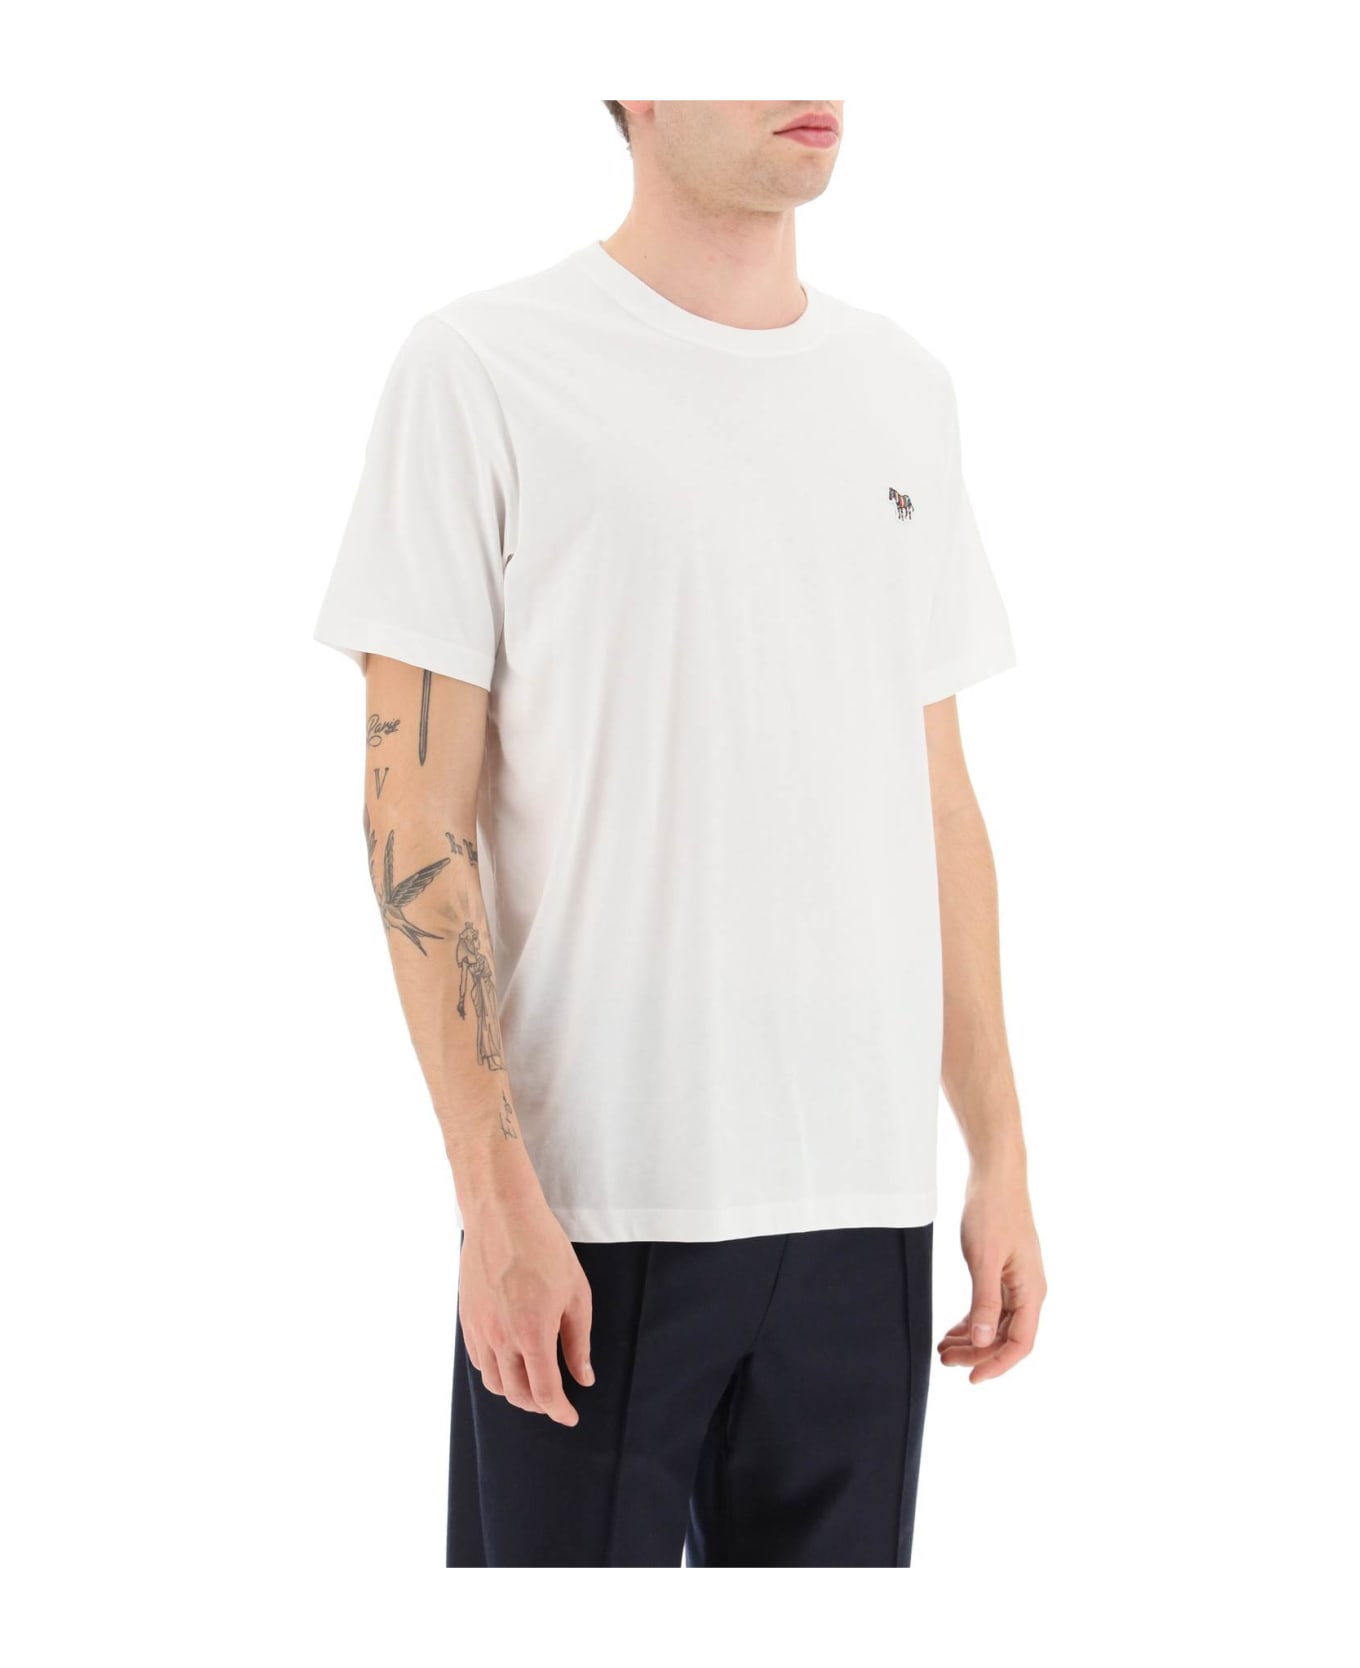 PS by Paul Smith Organic Cotton T-shirt - Bianco シャツ